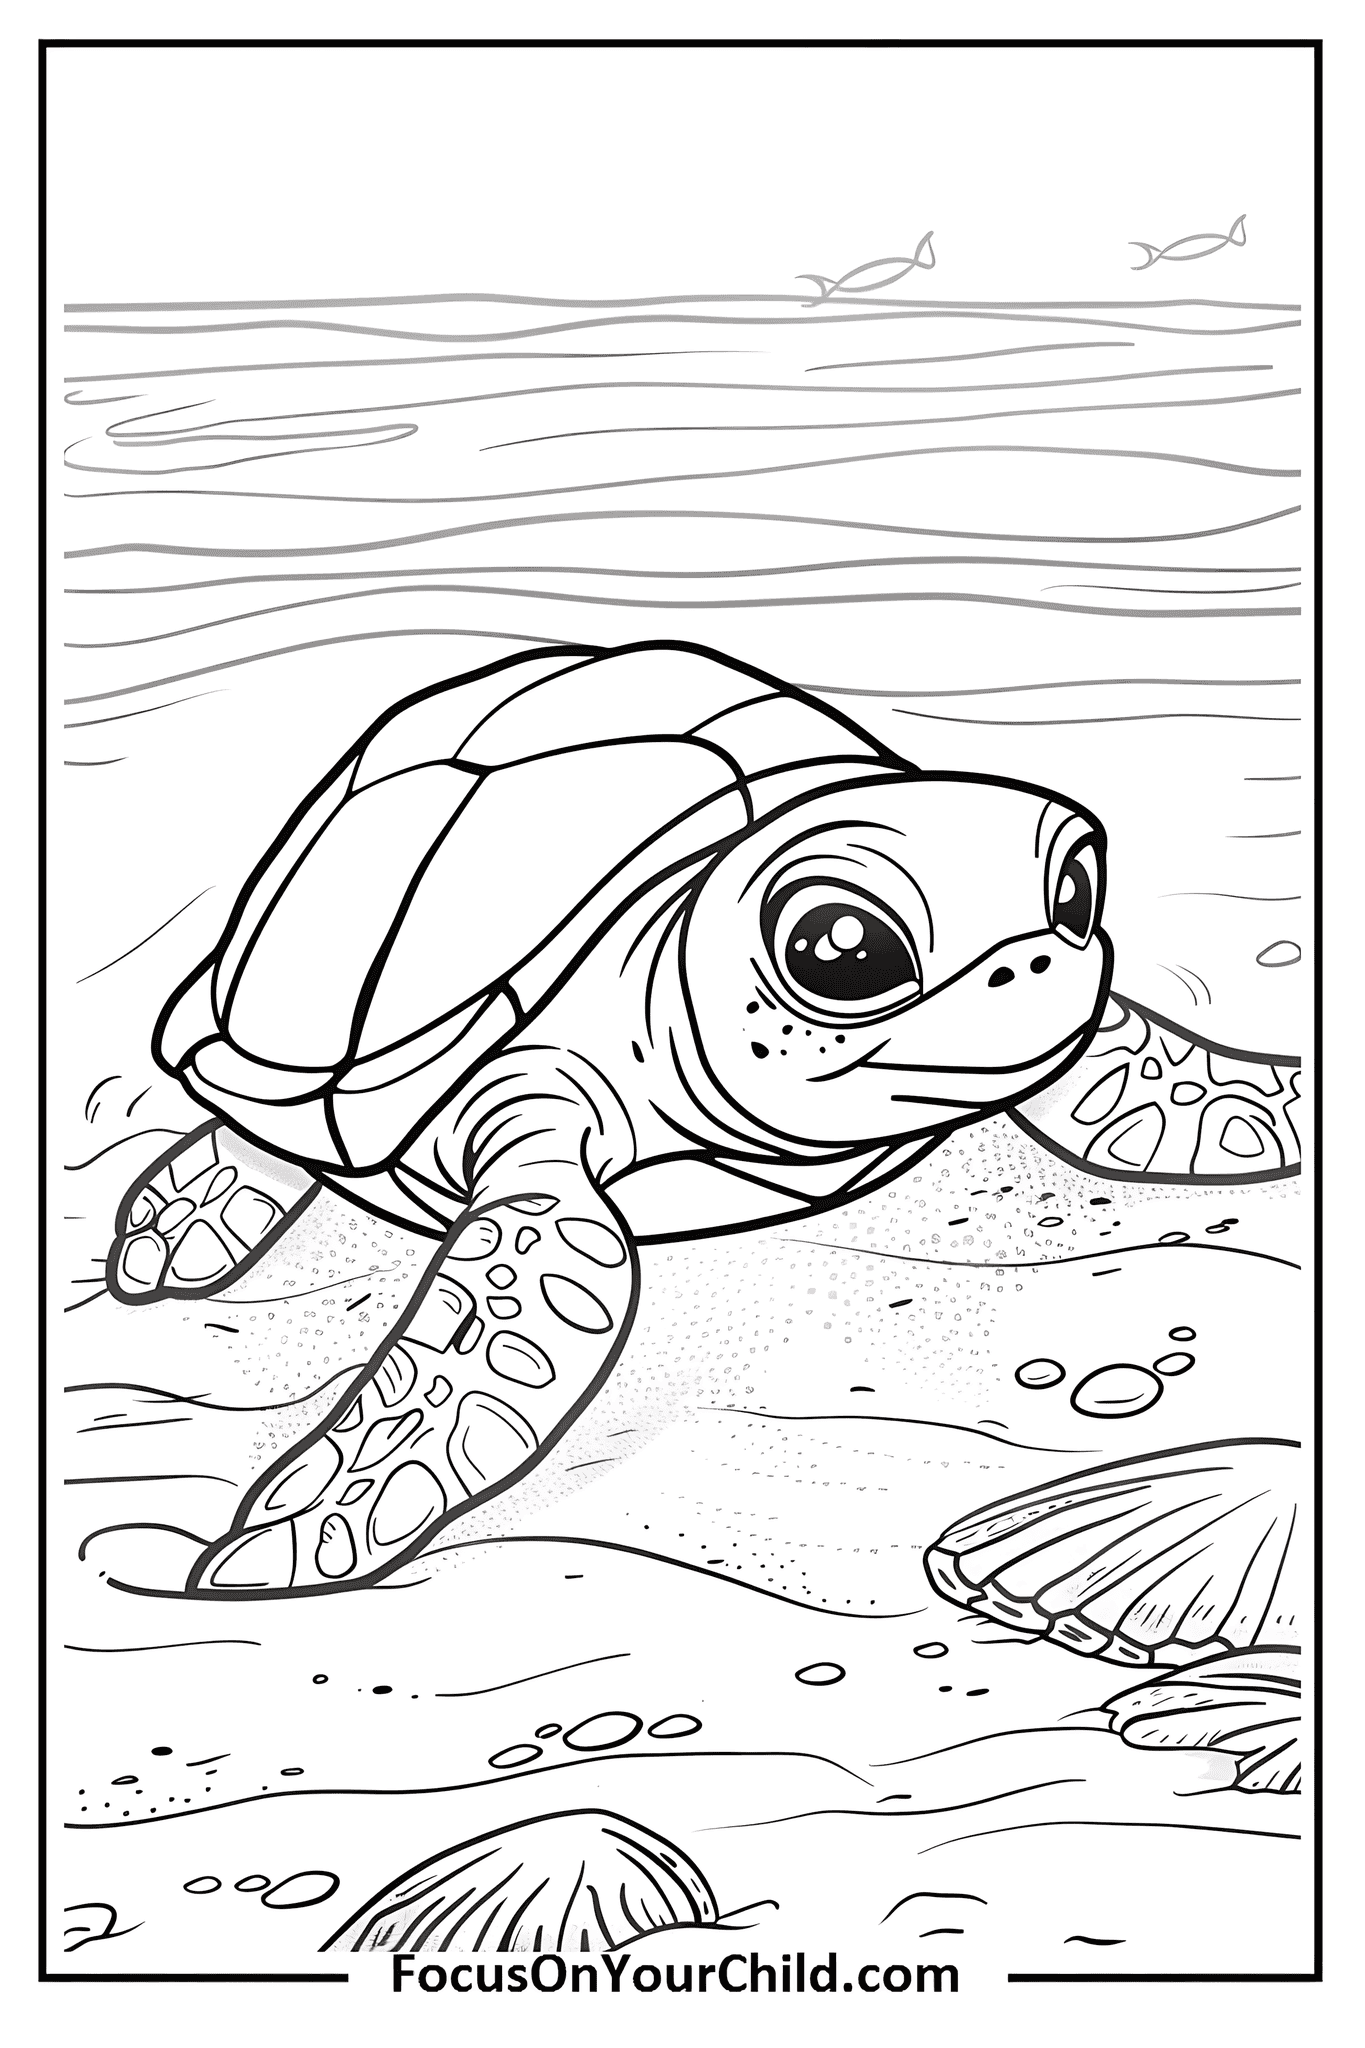 Young sea turtle on sandy beach heading towards ocean.